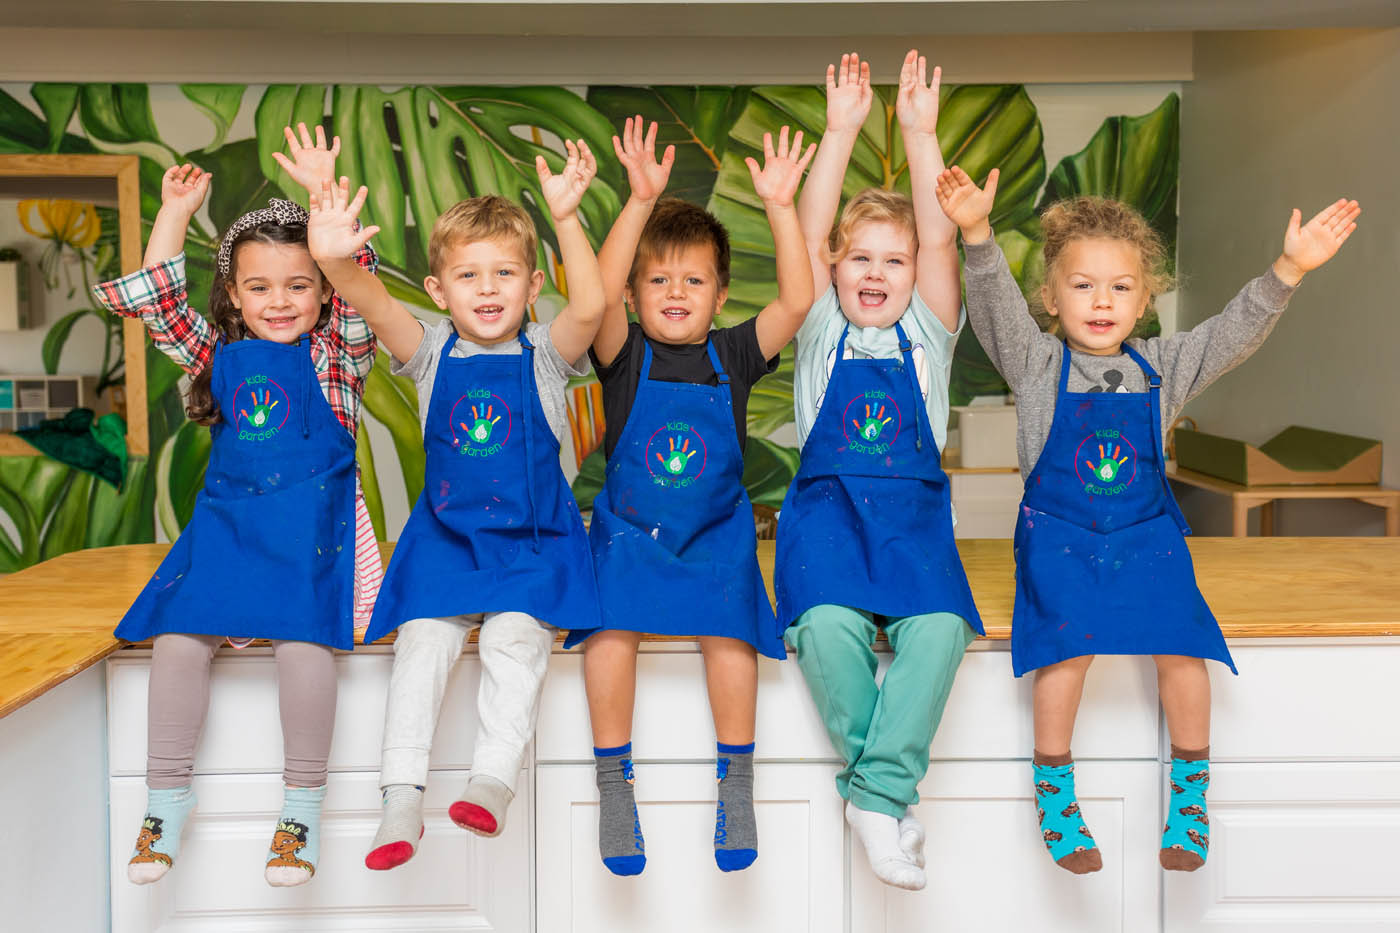 Kids in blue aprons at Kids Garden Charleston learning center.